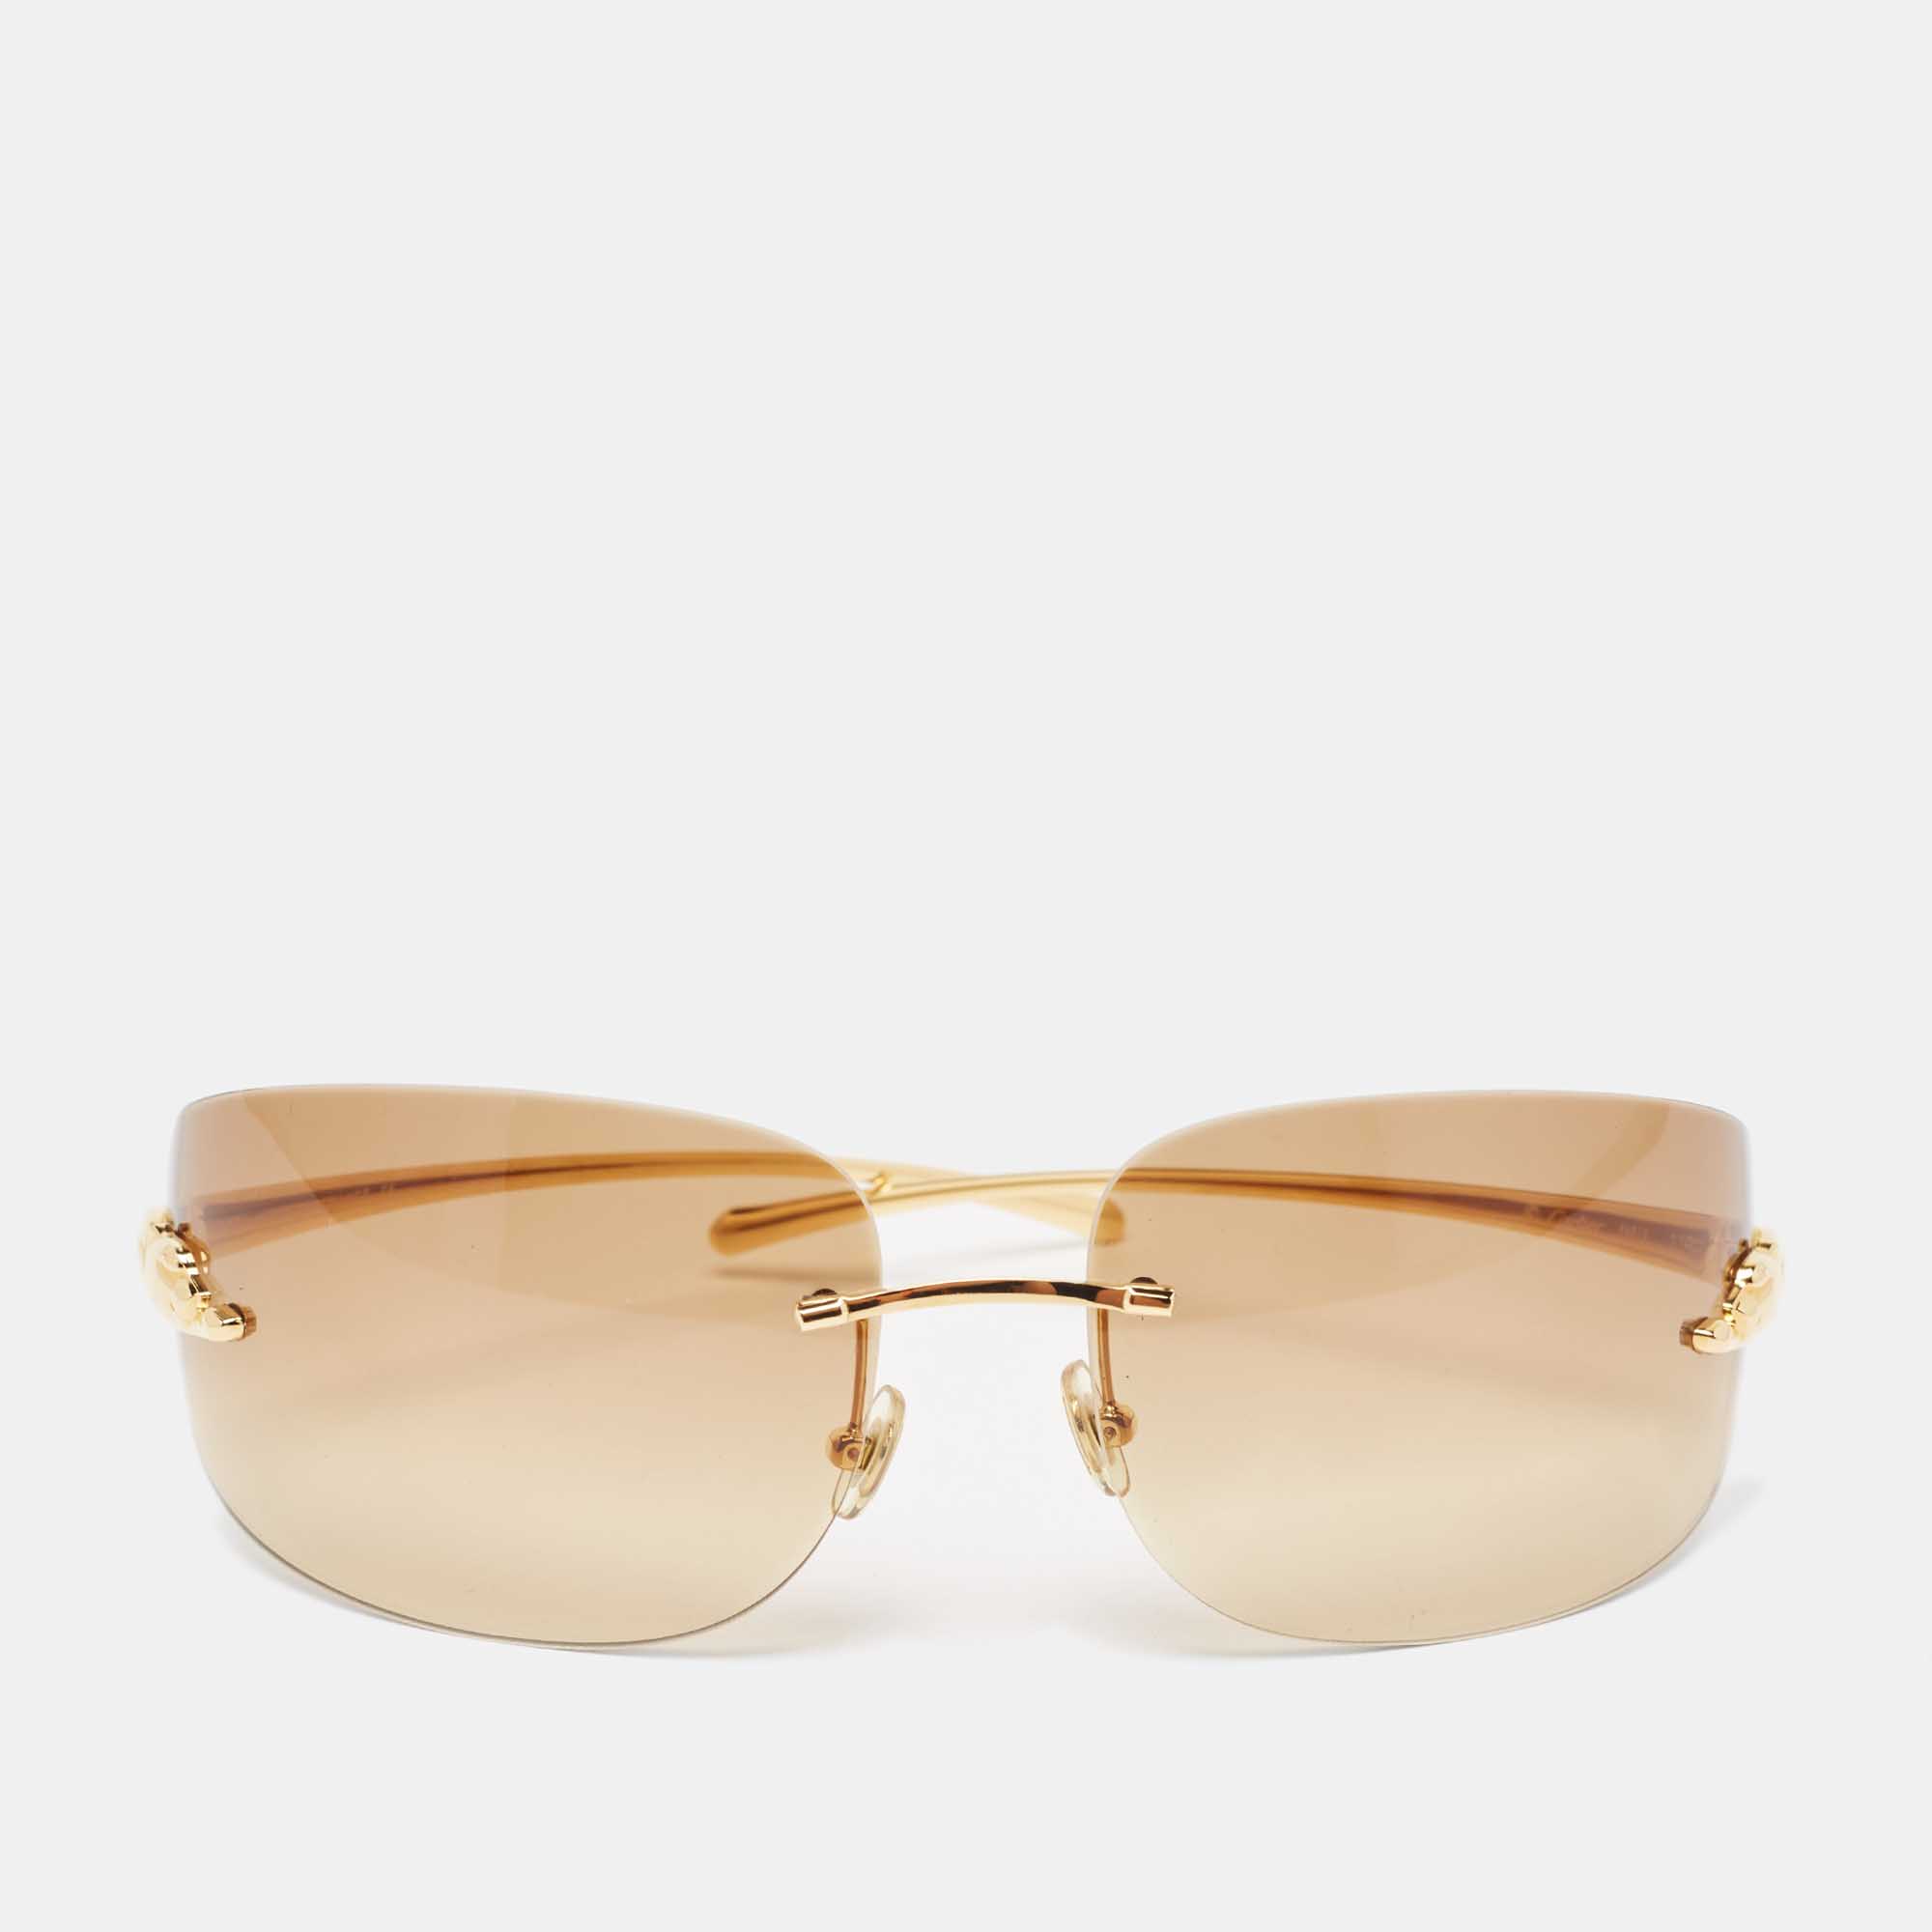 Cartier Panthere Frameless Sunglasses T8201077 F GRAY GRAY 72 20 110 | eBay